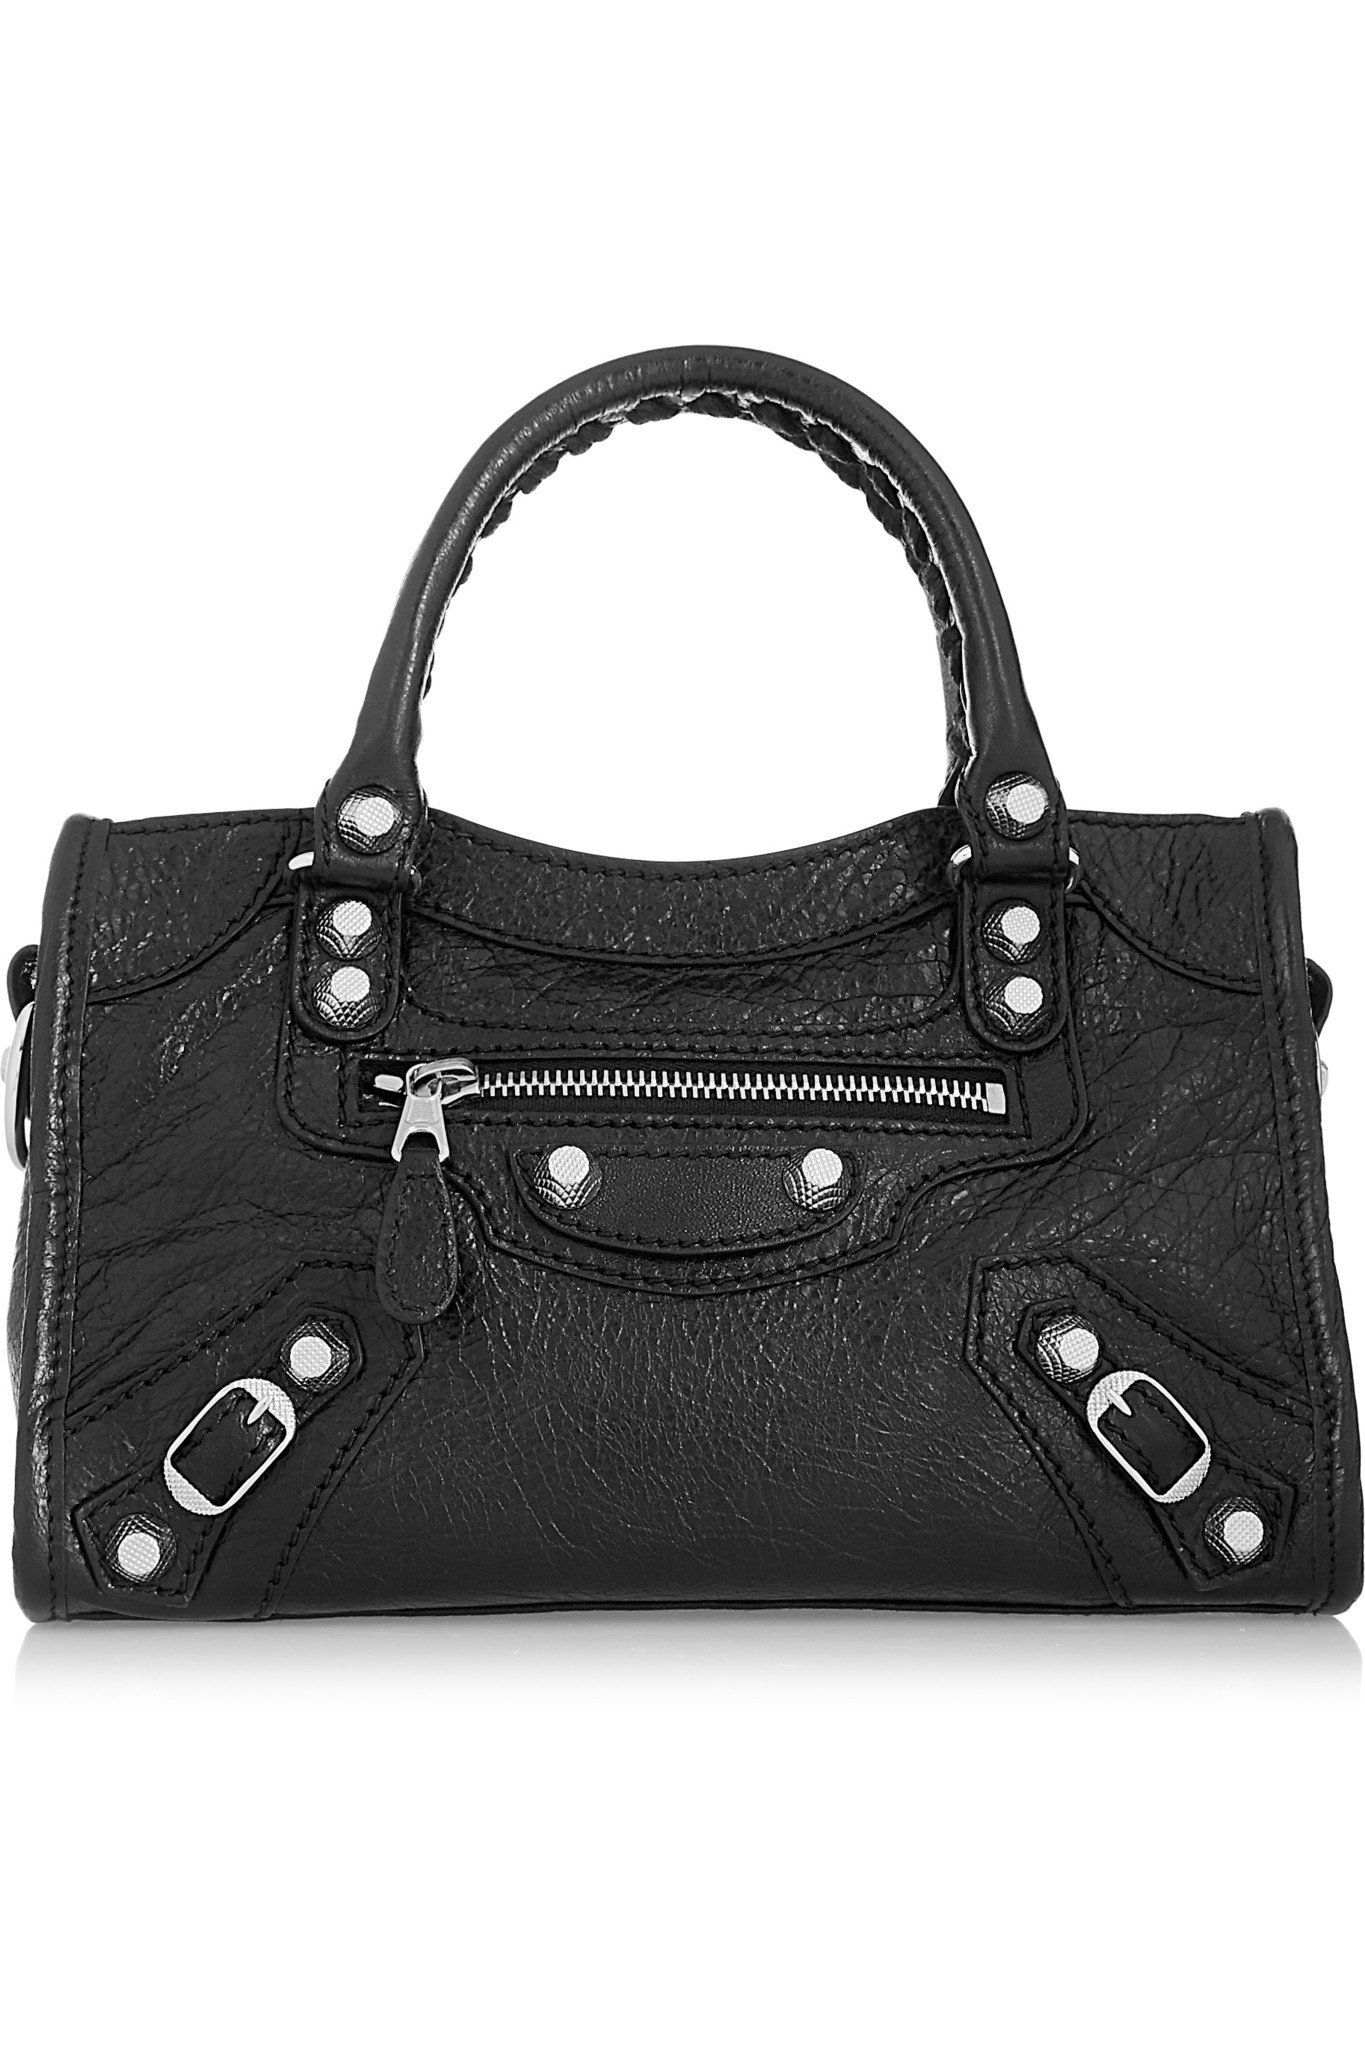 Balenciaga City Mini Textured-leather Shoulder Bag in Black - Lyst